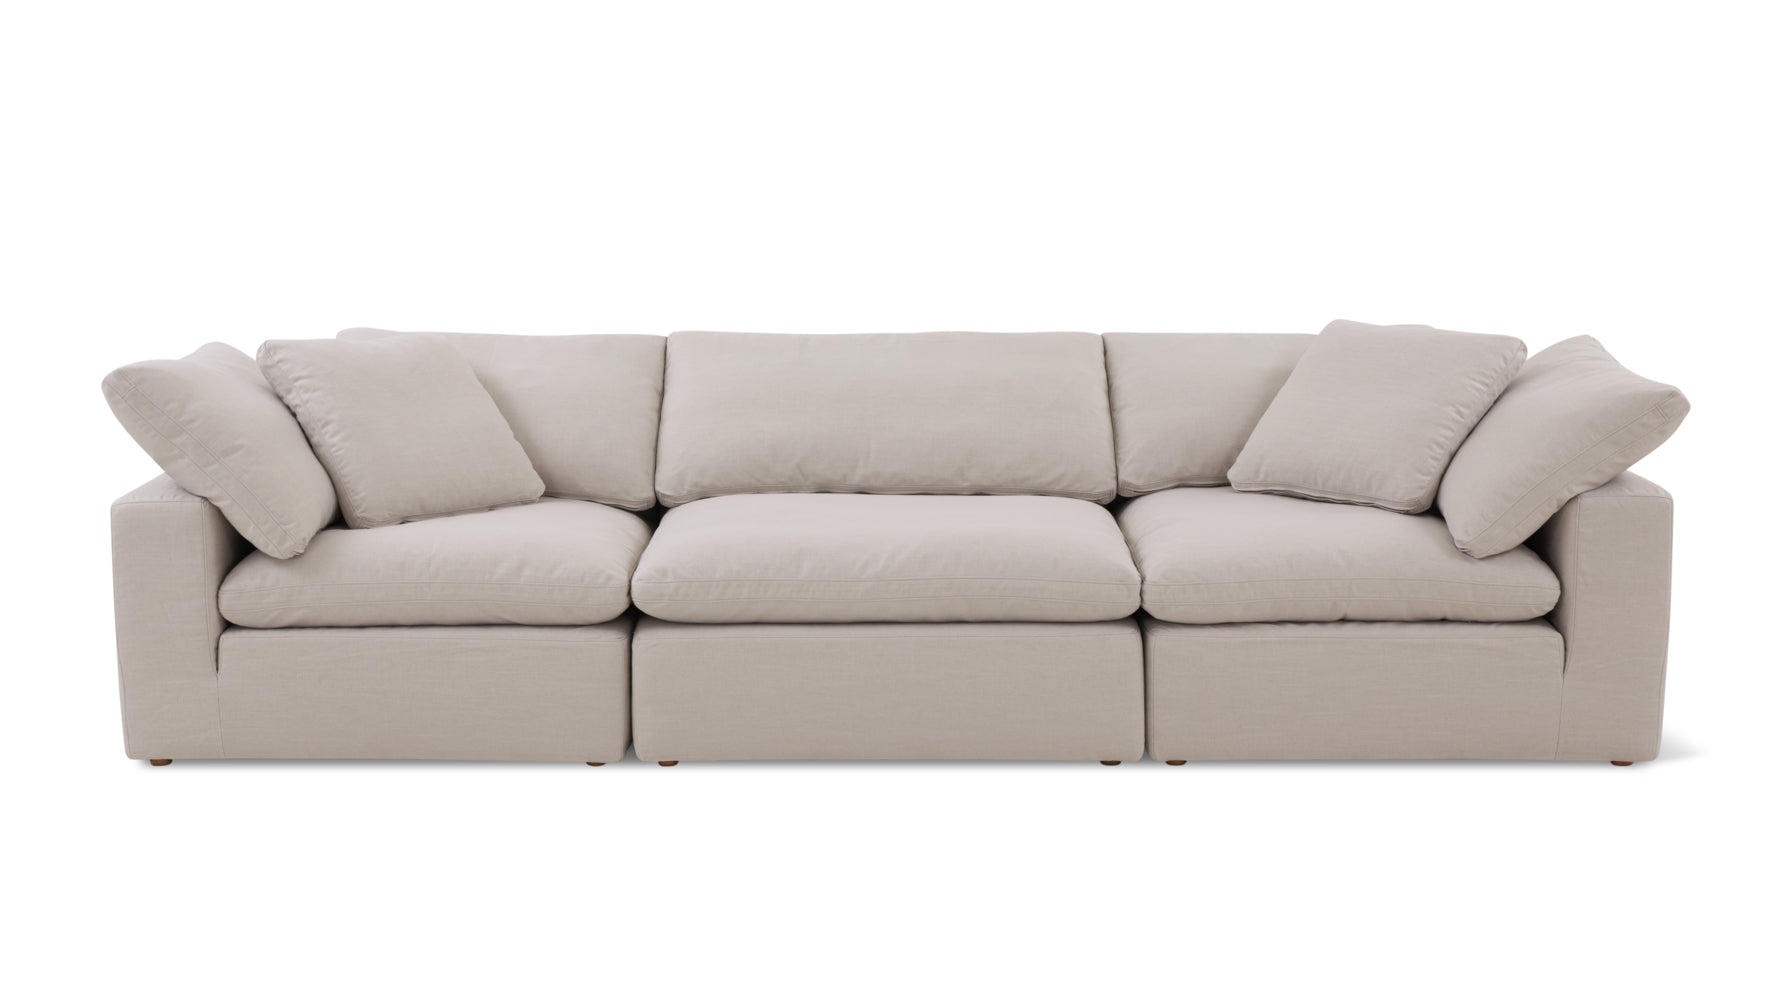 Movie Night™ 3-Piece Modular Sofa, Standard, Clay - Image 1